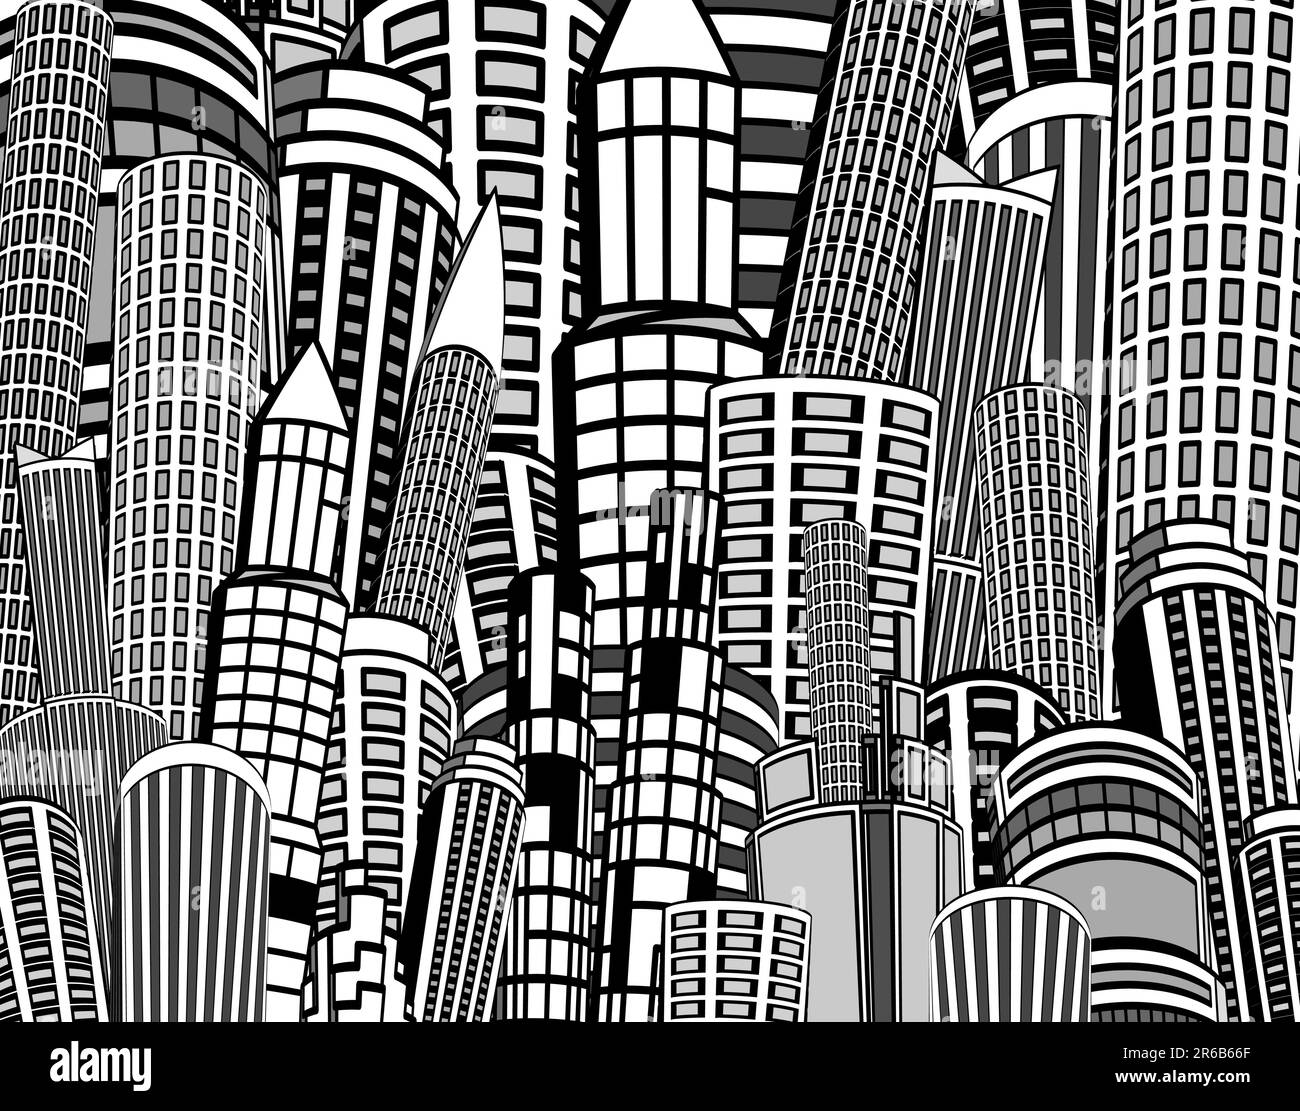 Editable vector background illustration of a cartoon city Stock Vector ...